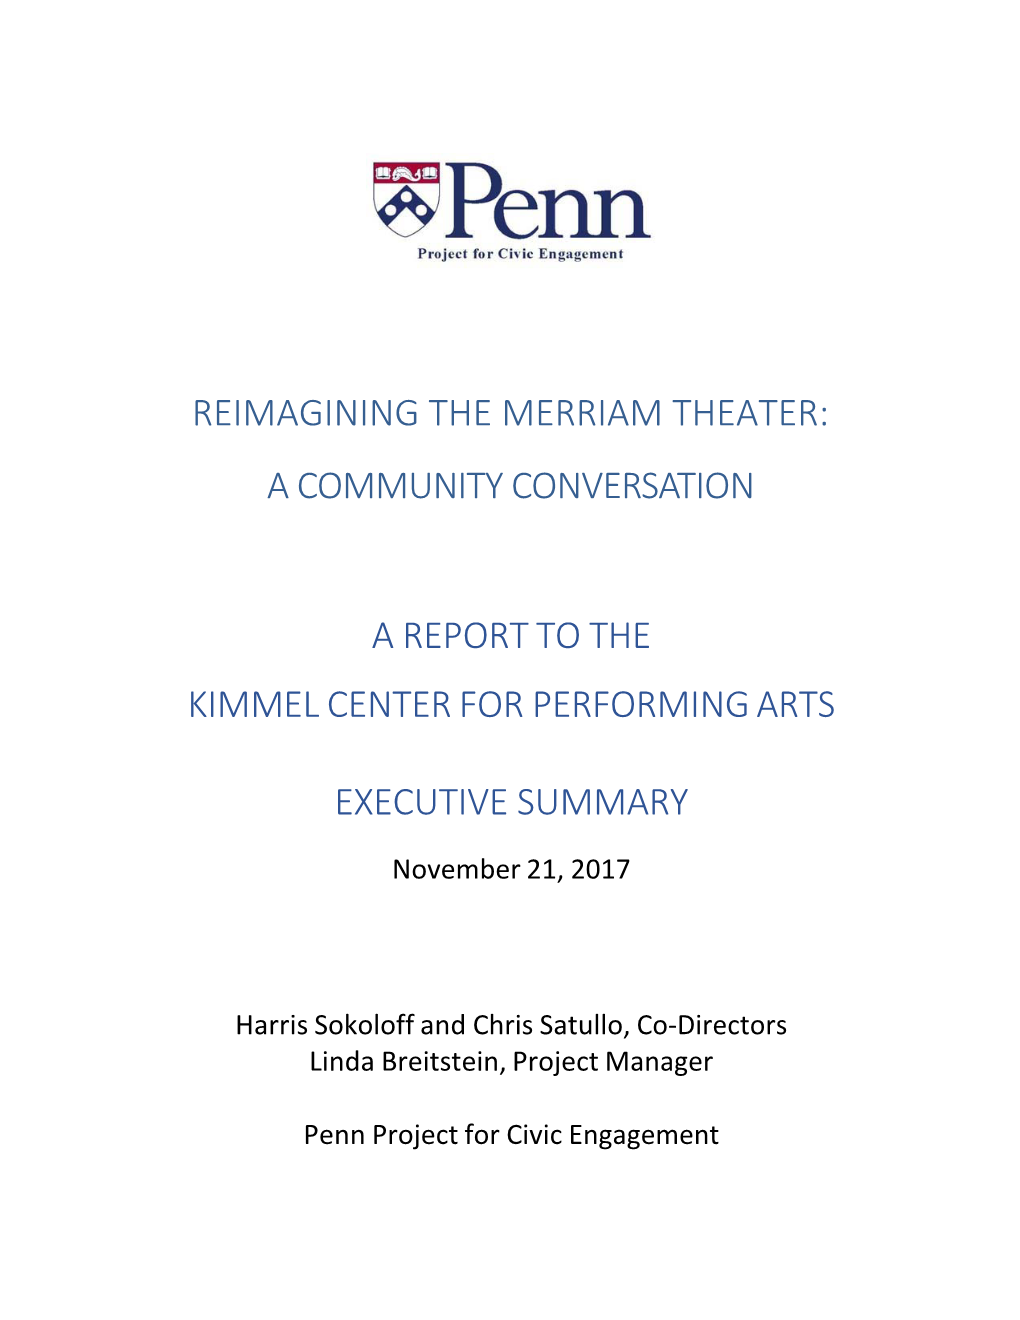 Reimagining the Merriam Theater: a Community Conversation